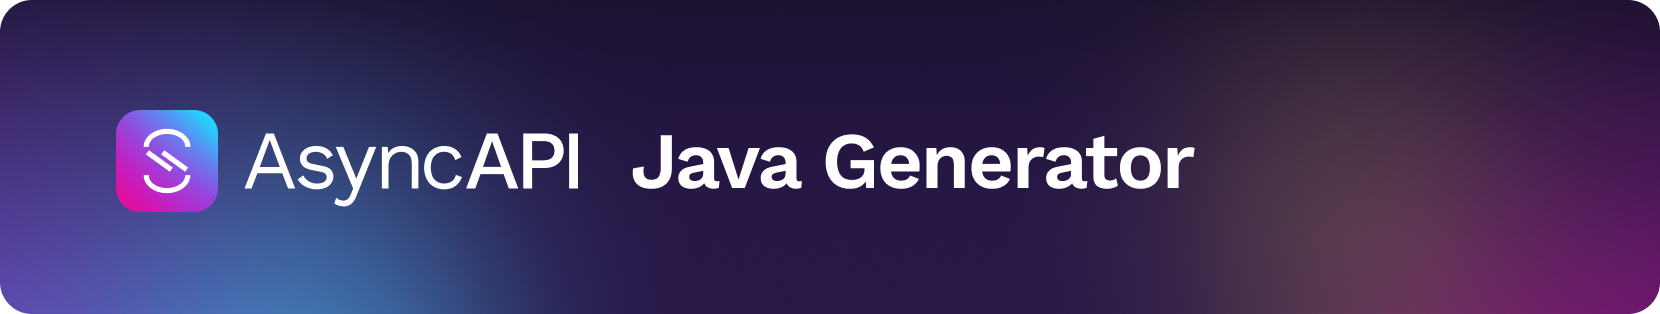 AsyncAPI Java Generator